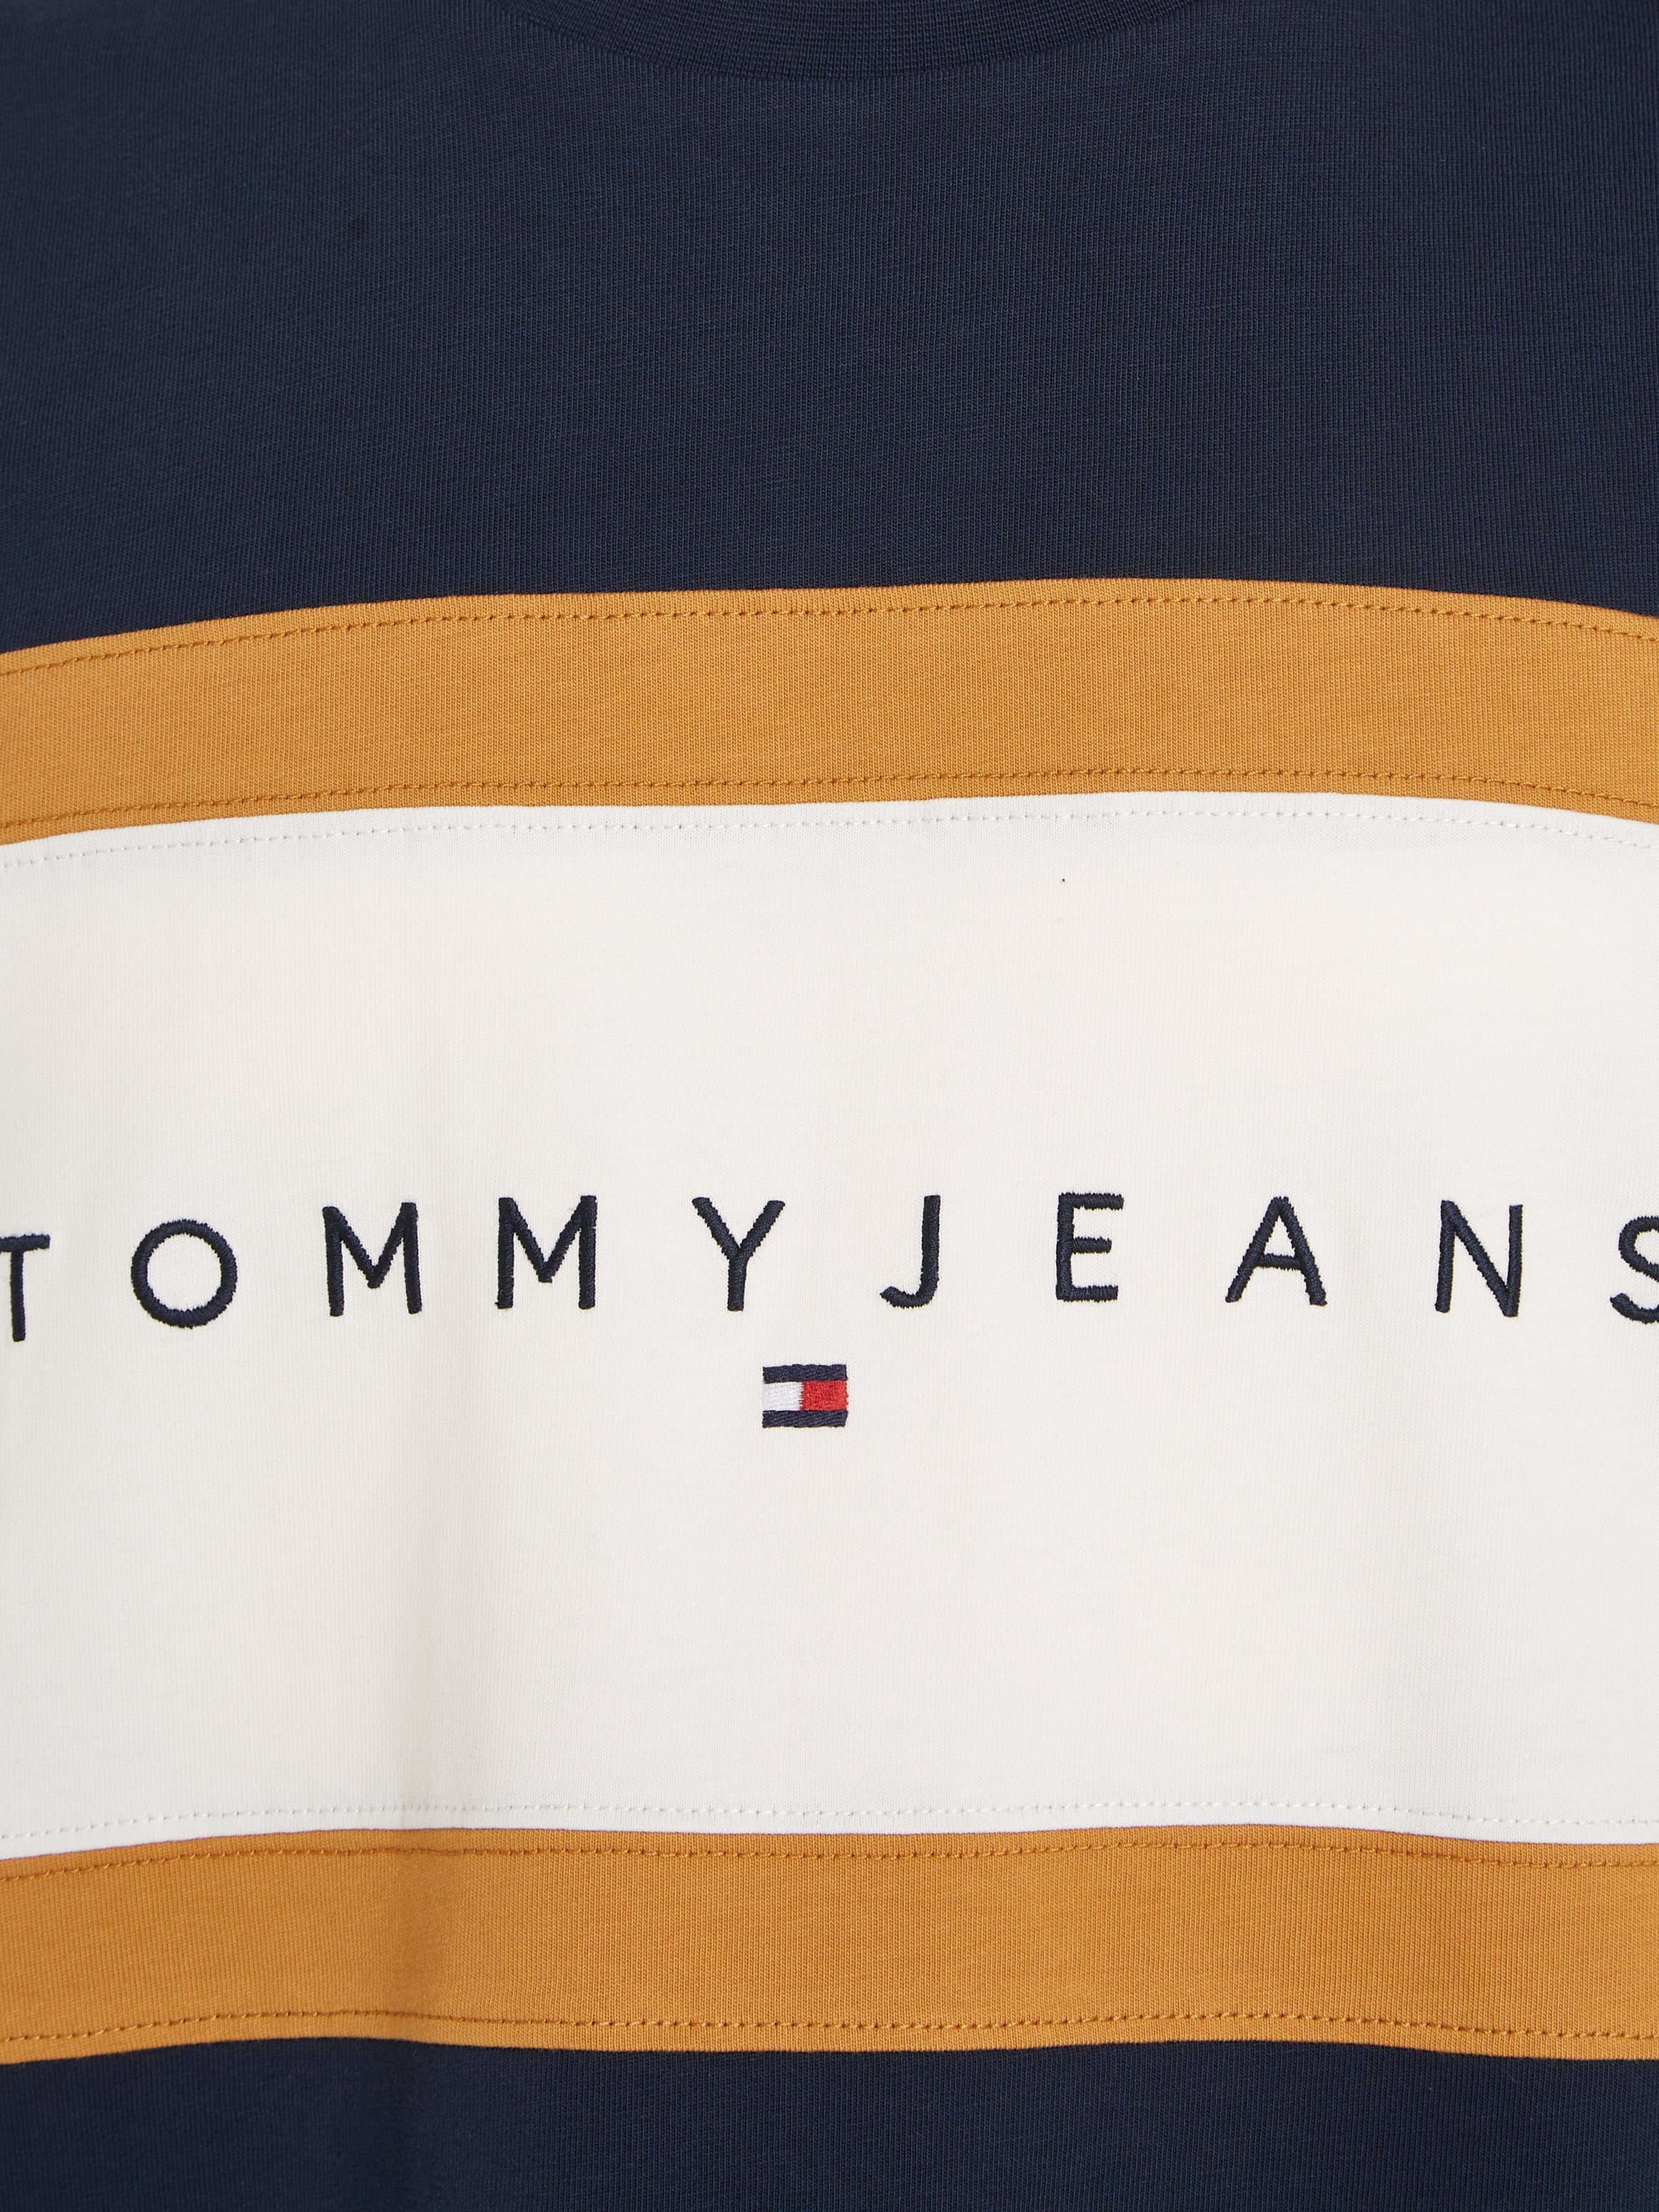 & mit REG großem TEE Jeans Tommy CUT Markenschriftzug SEW TJM T-Shirt